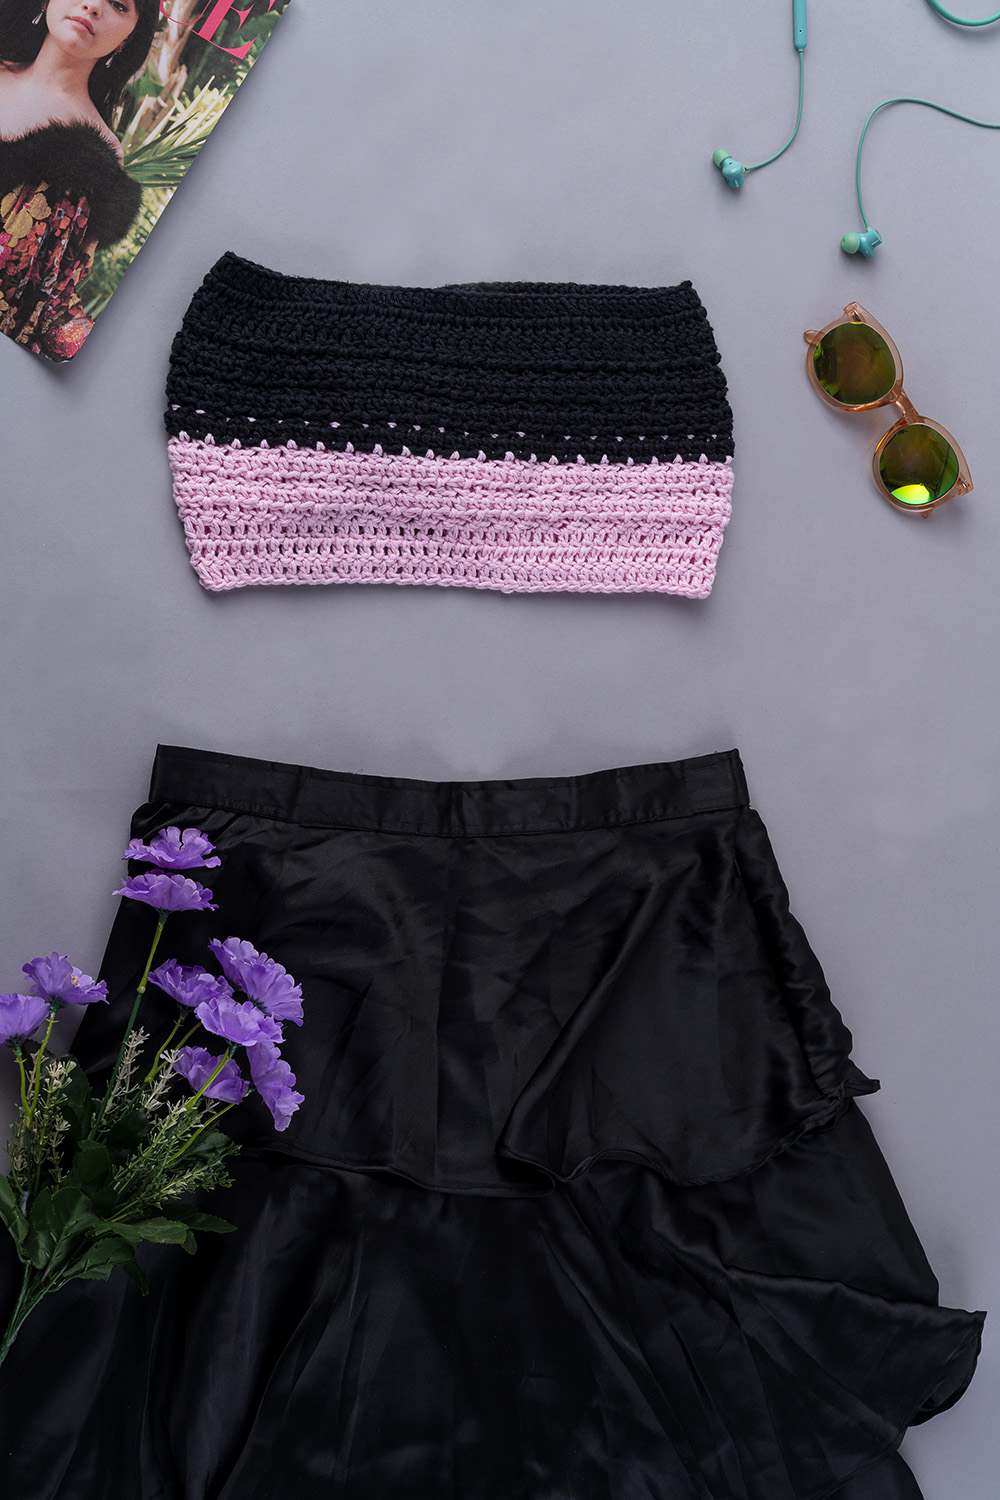 Buy Crochet Tube Top In the Best Price - Hand Knitted Crochet Top & Bralette